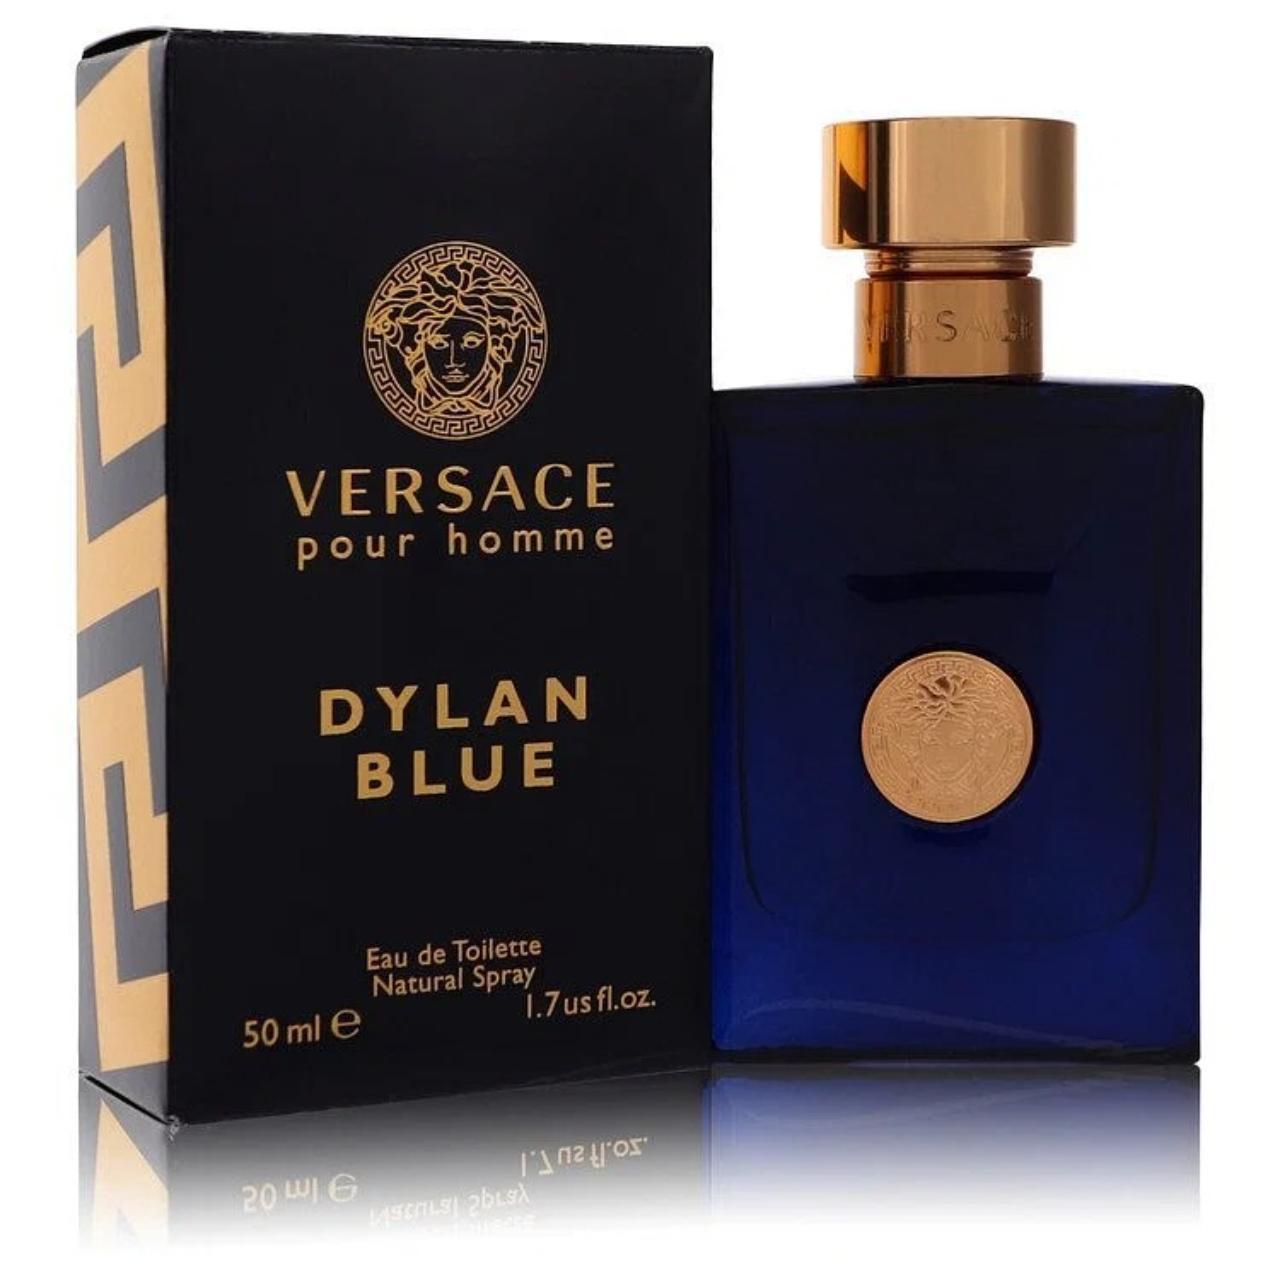 Versace Fragrance | Depop